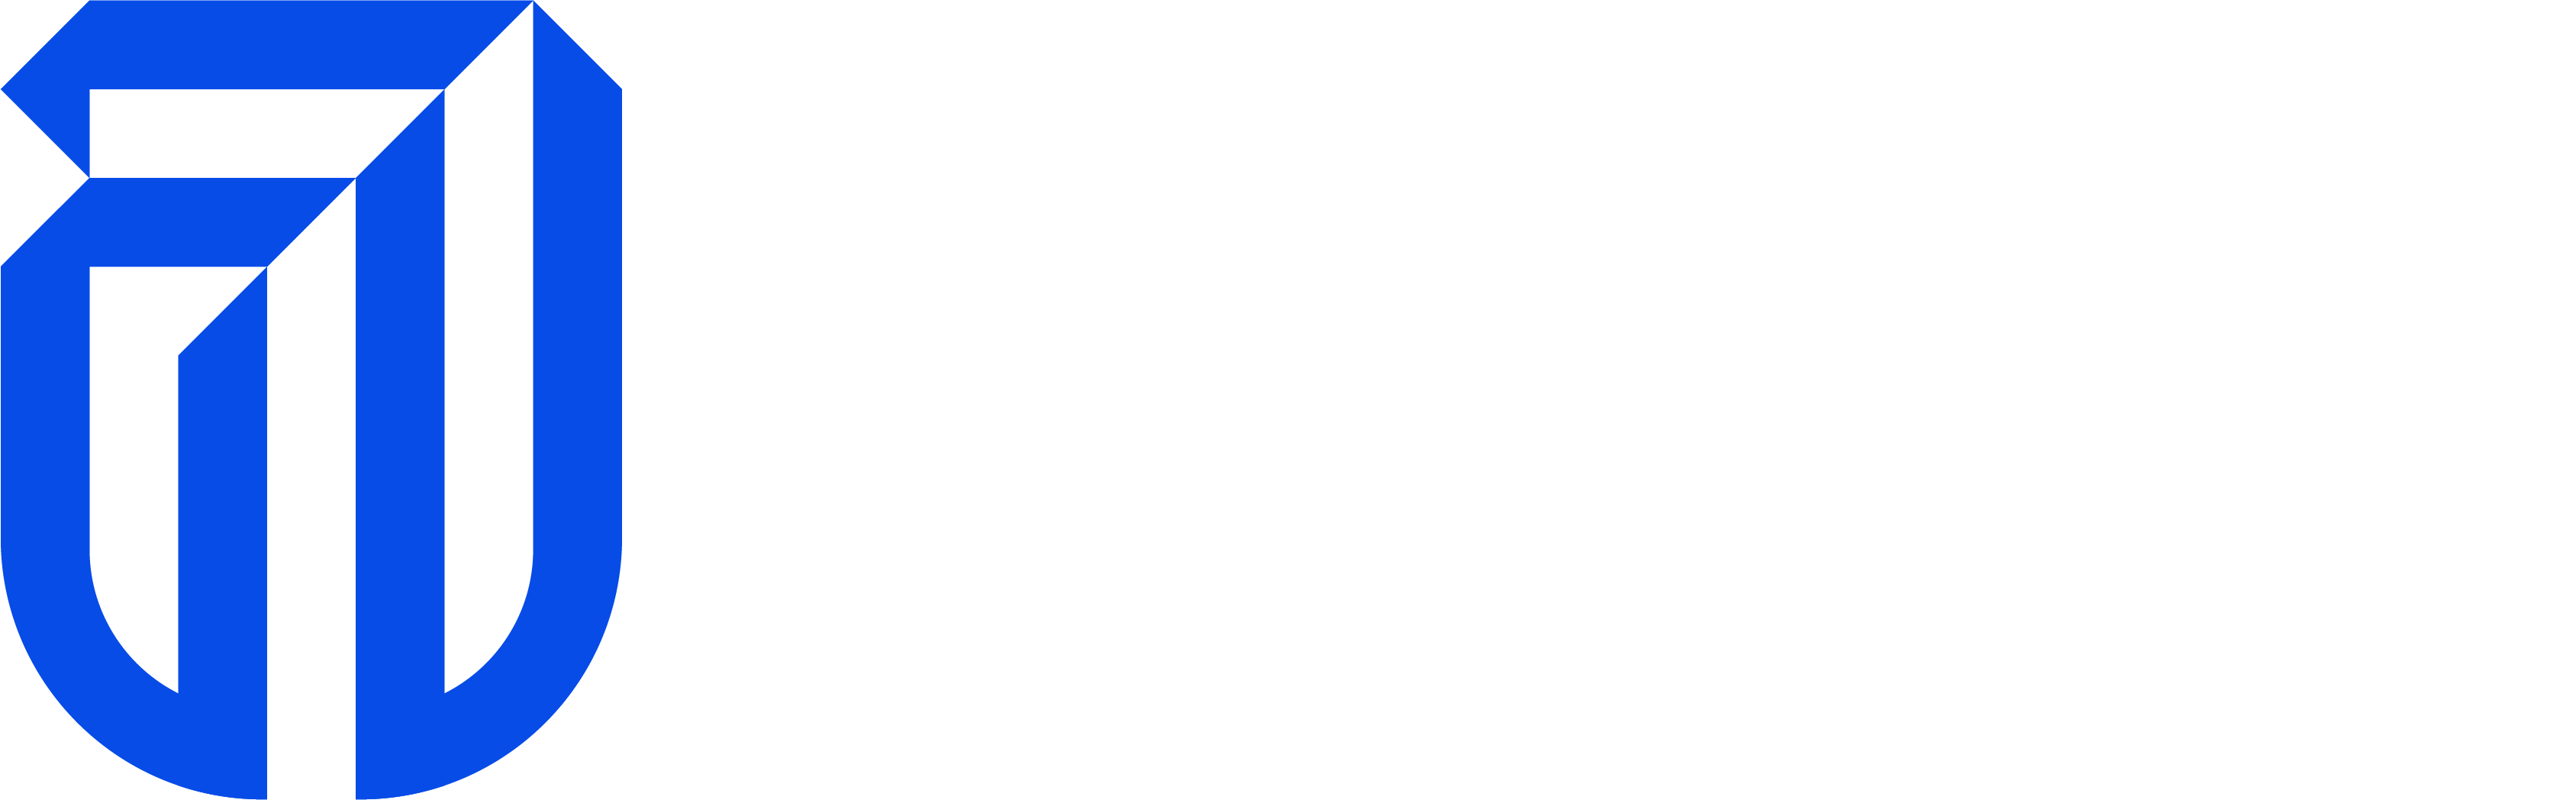 Forex Aspire | Finspot Academy Lagos Nigeria